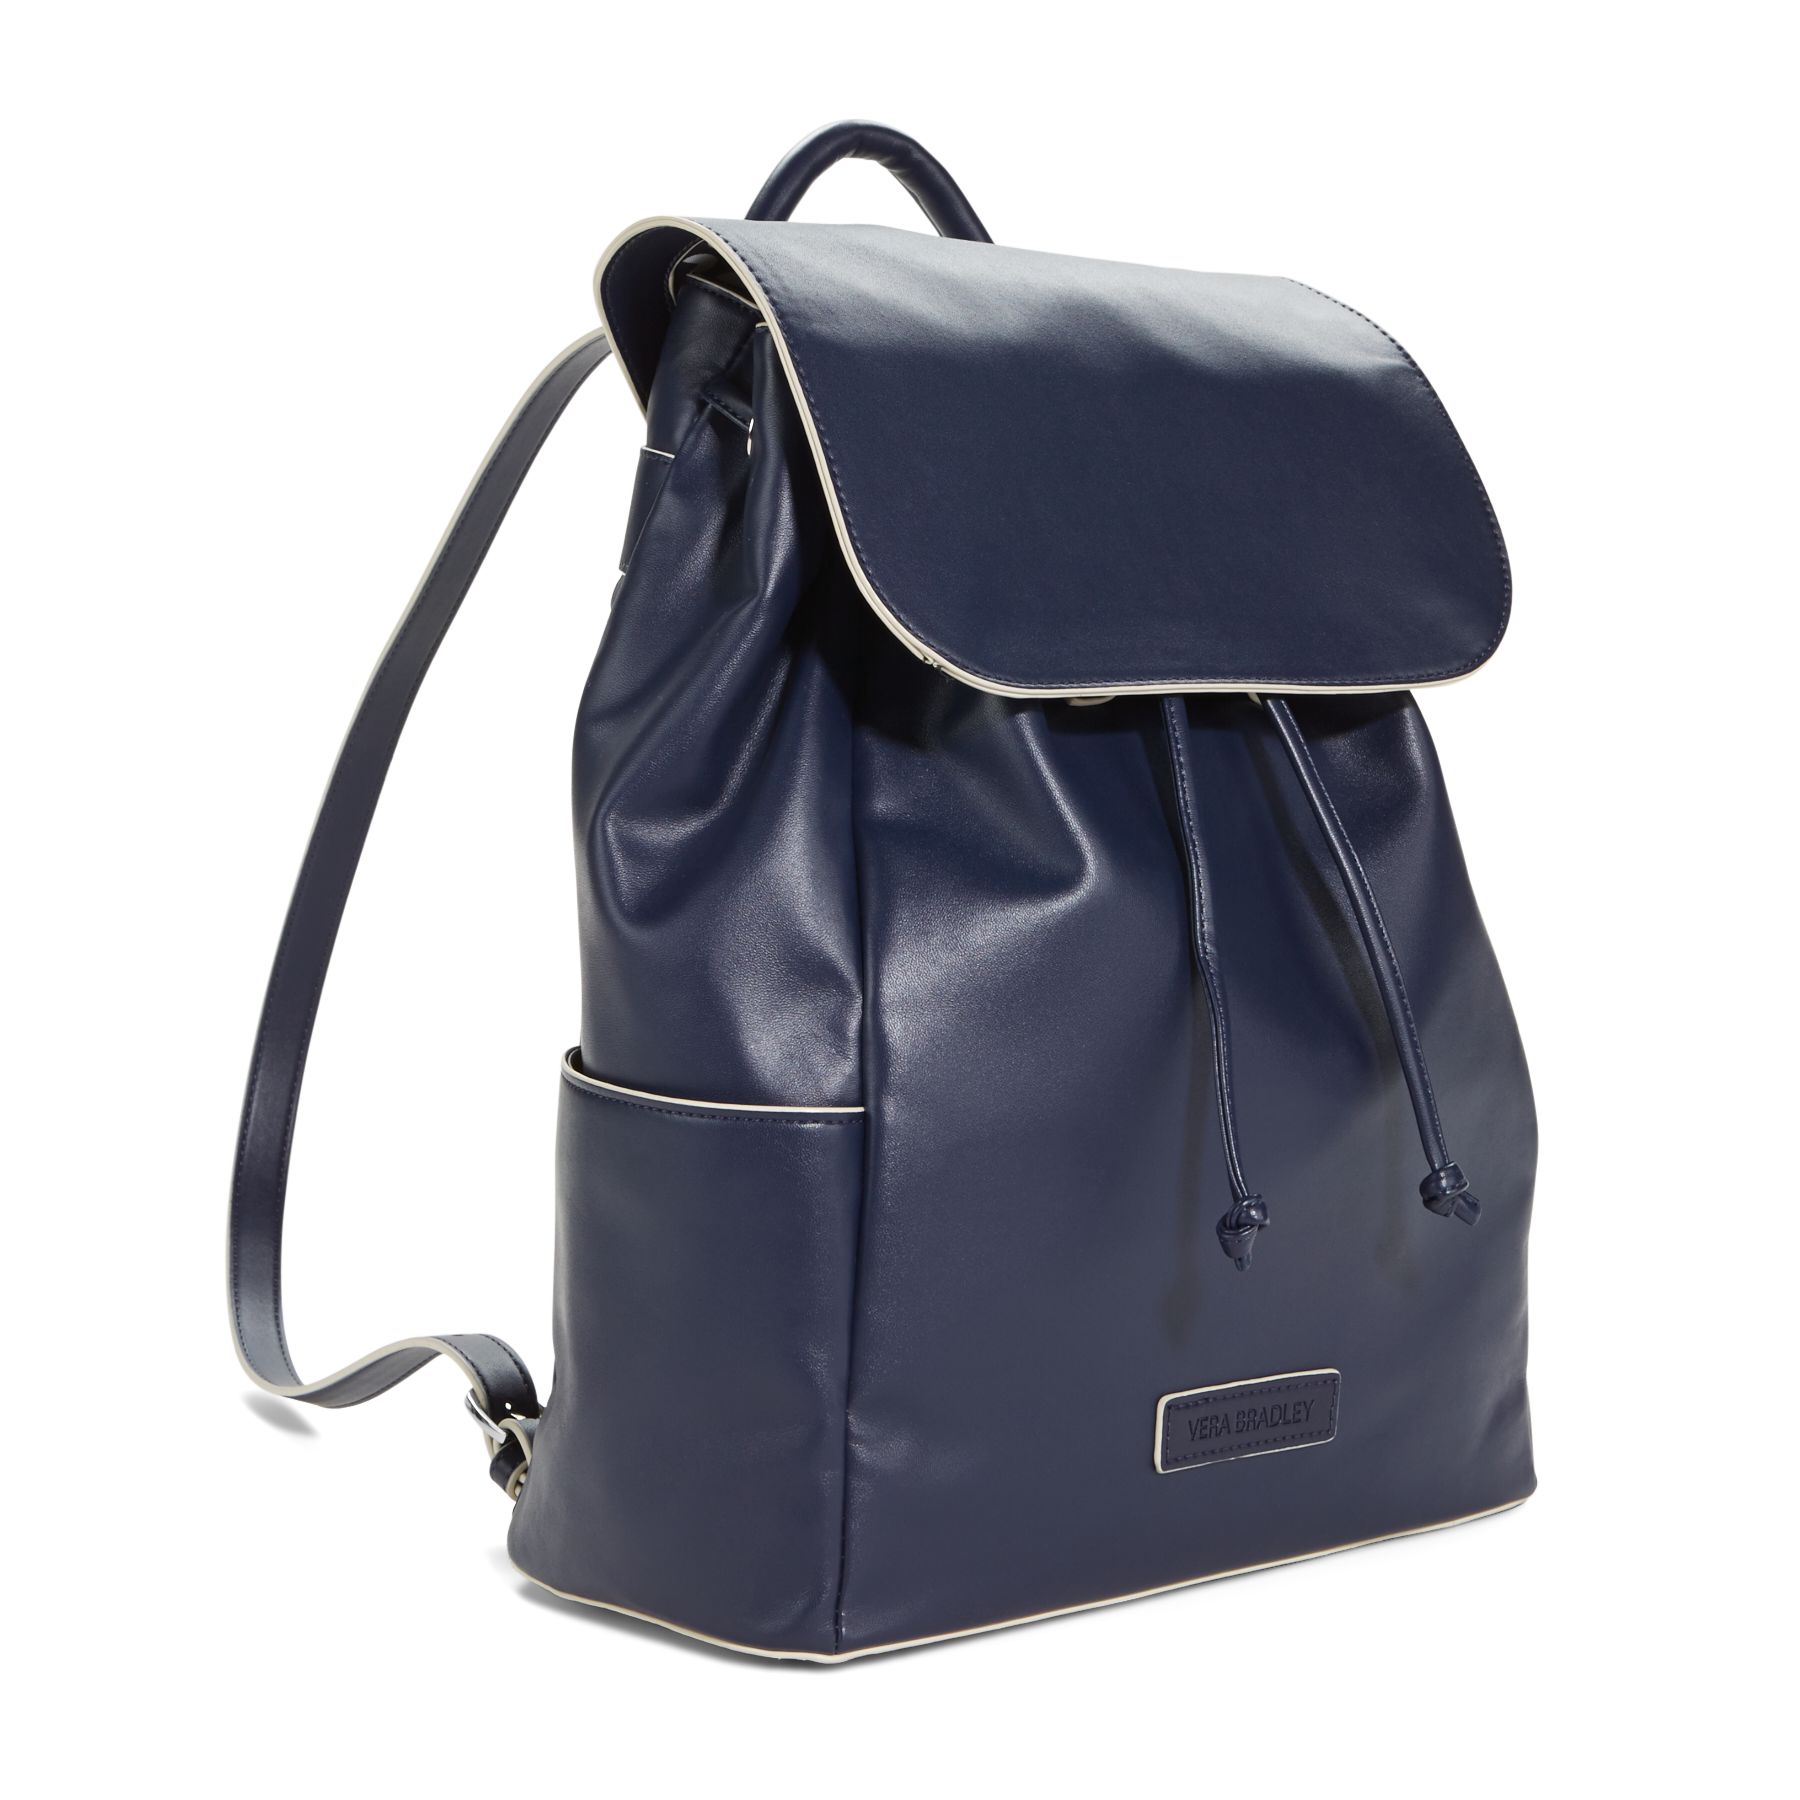 Vera Bradley Faux Leather Drawstring Backpack Purse | eBay